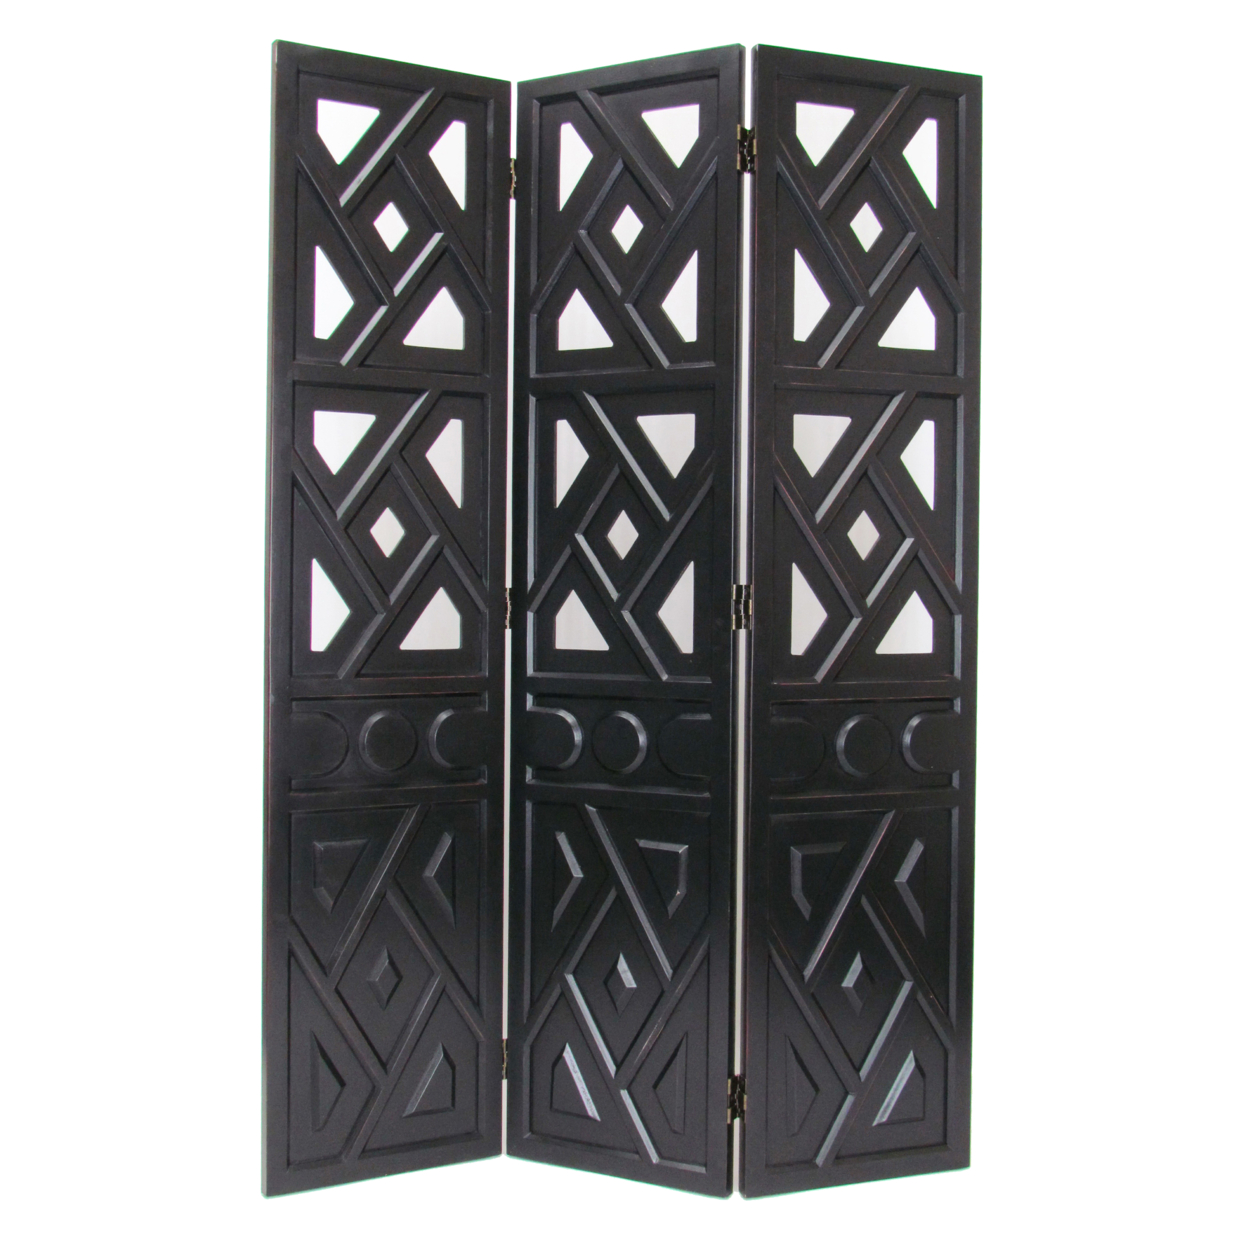 Wooden 3 Panel Room Divider With Geometric Design, Black- Saltoro Sherpi